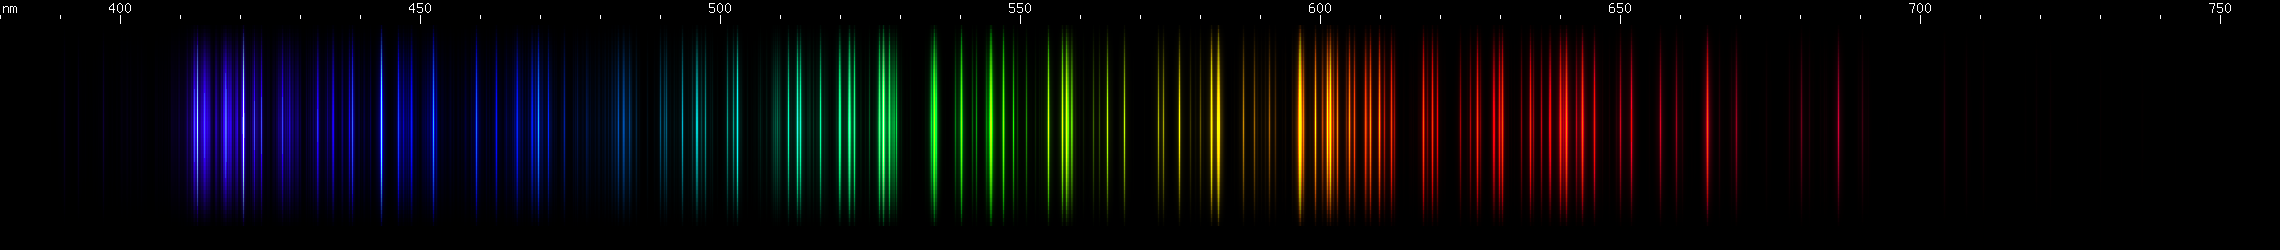 Spectral Lines of Europium